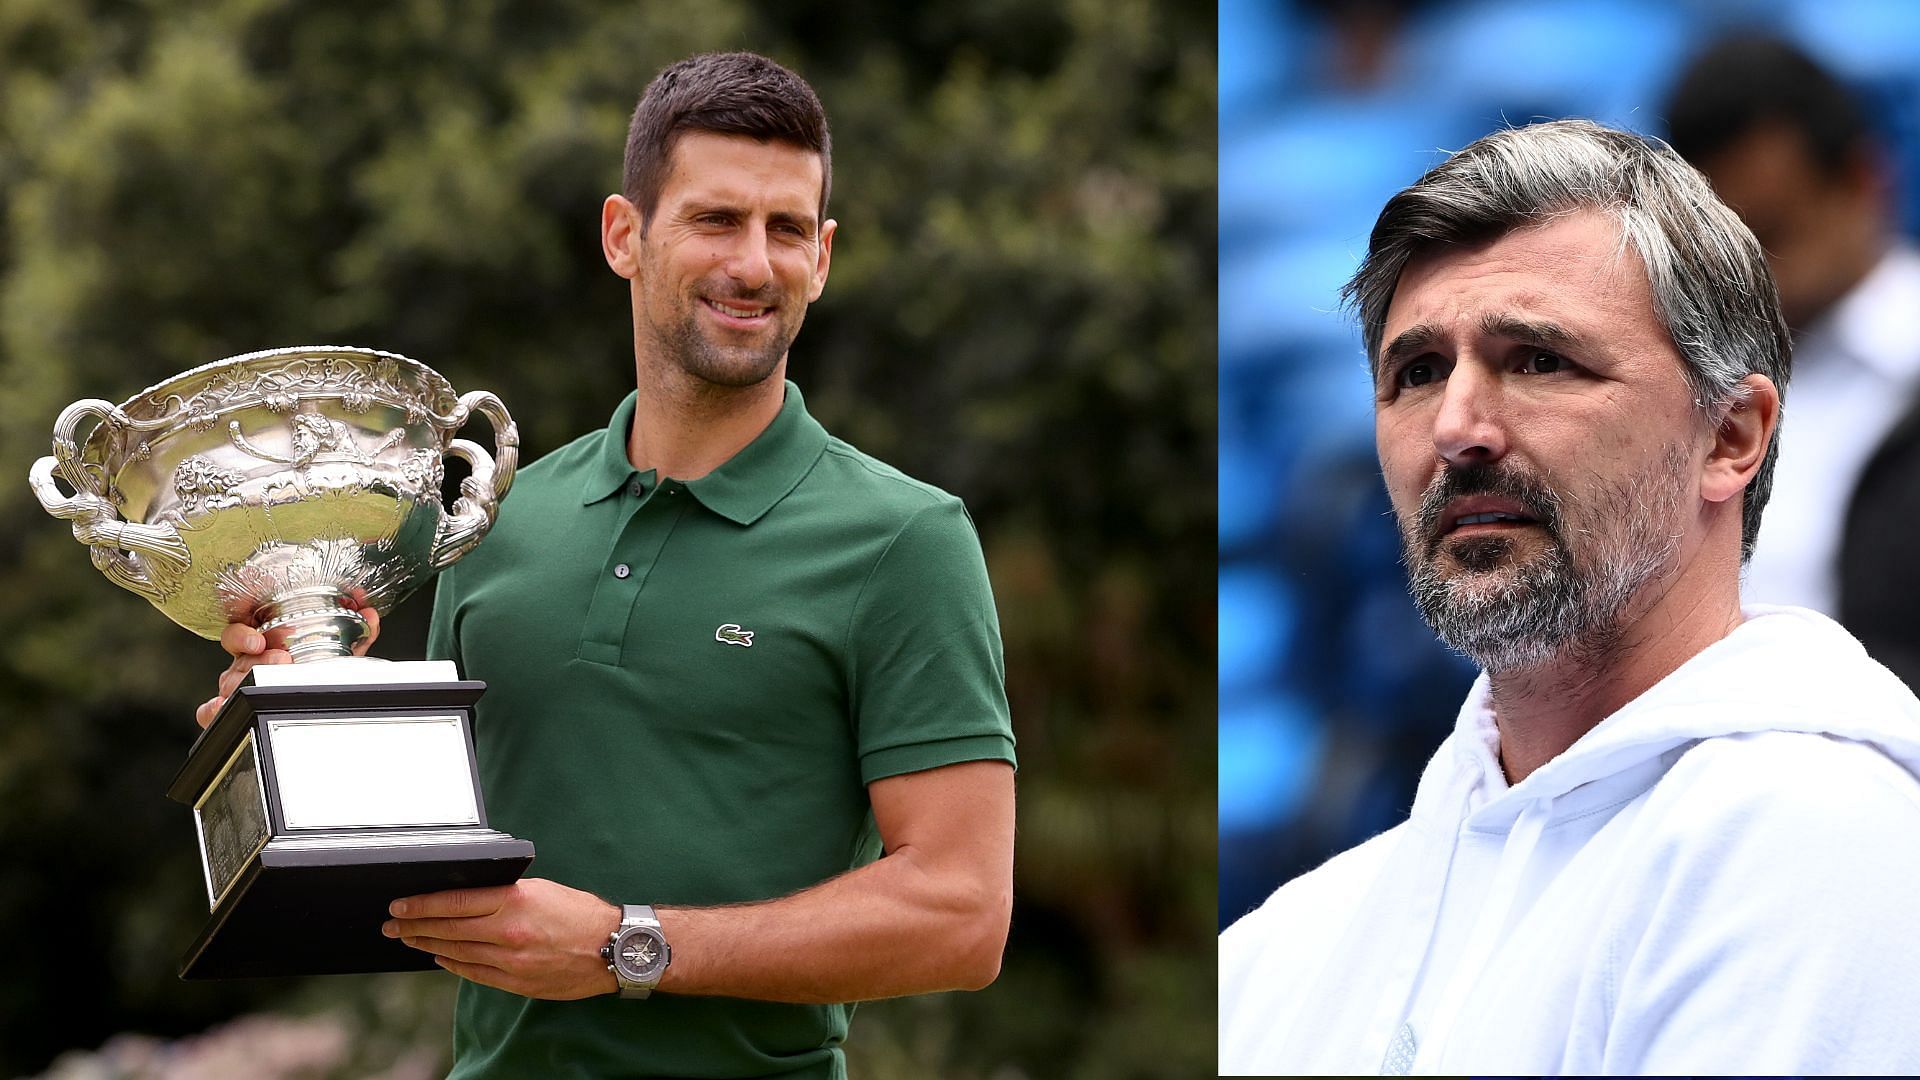 Goran Ivanisevic reveals details about Novak Djokovic